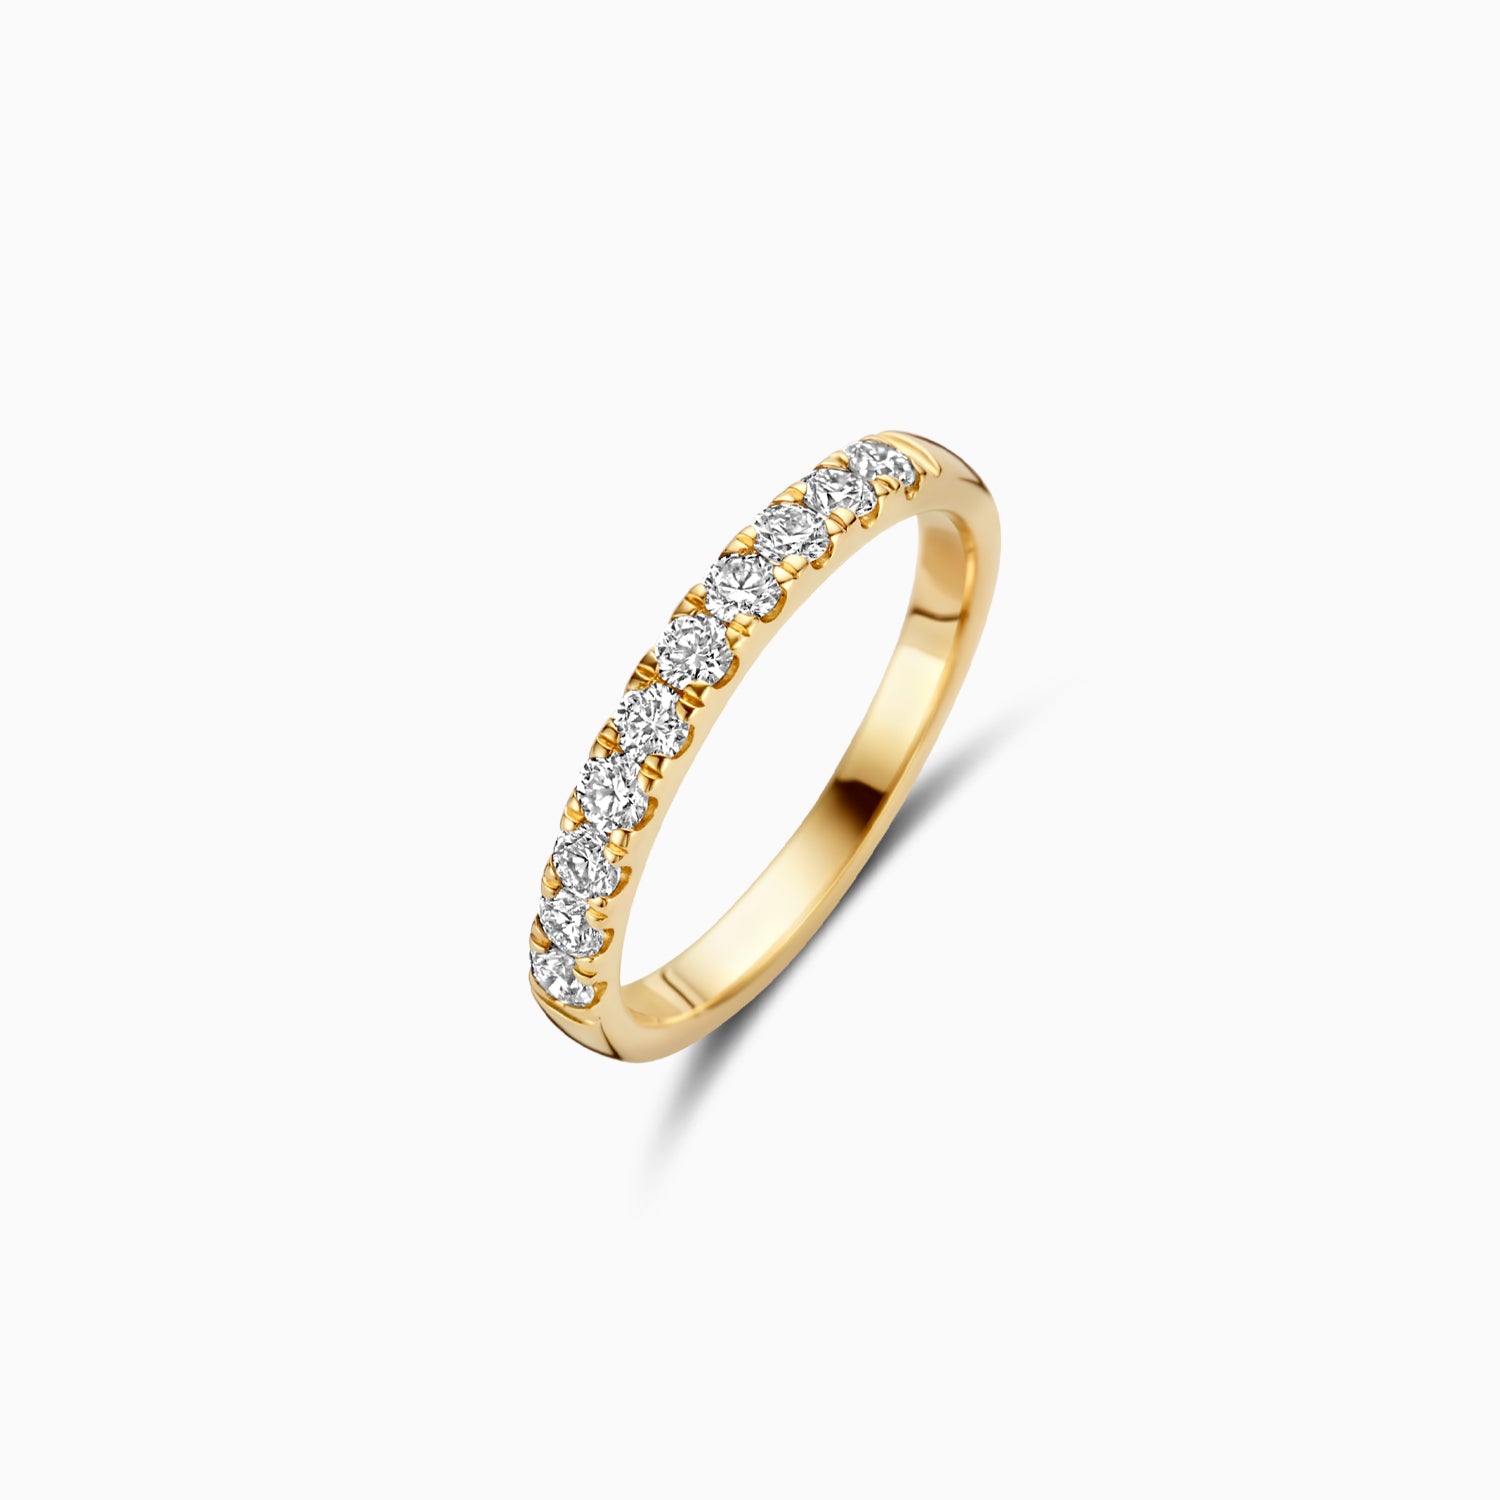 Lab diamonds Ringe LG1014Y - 585er Gelbgold